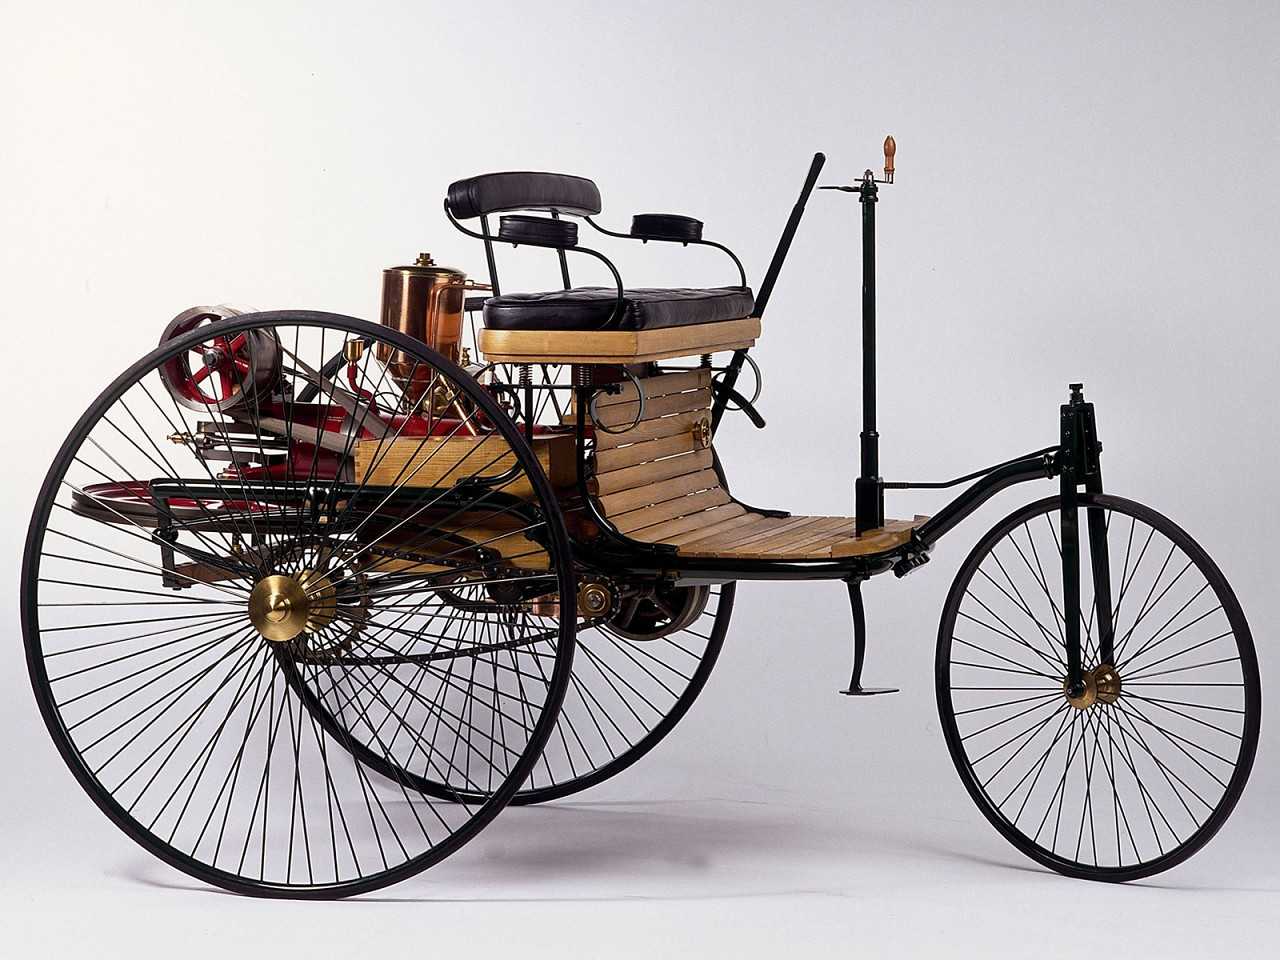 Benz Patent-Motorwagen, veculo considerado o primeiro carro do mundo